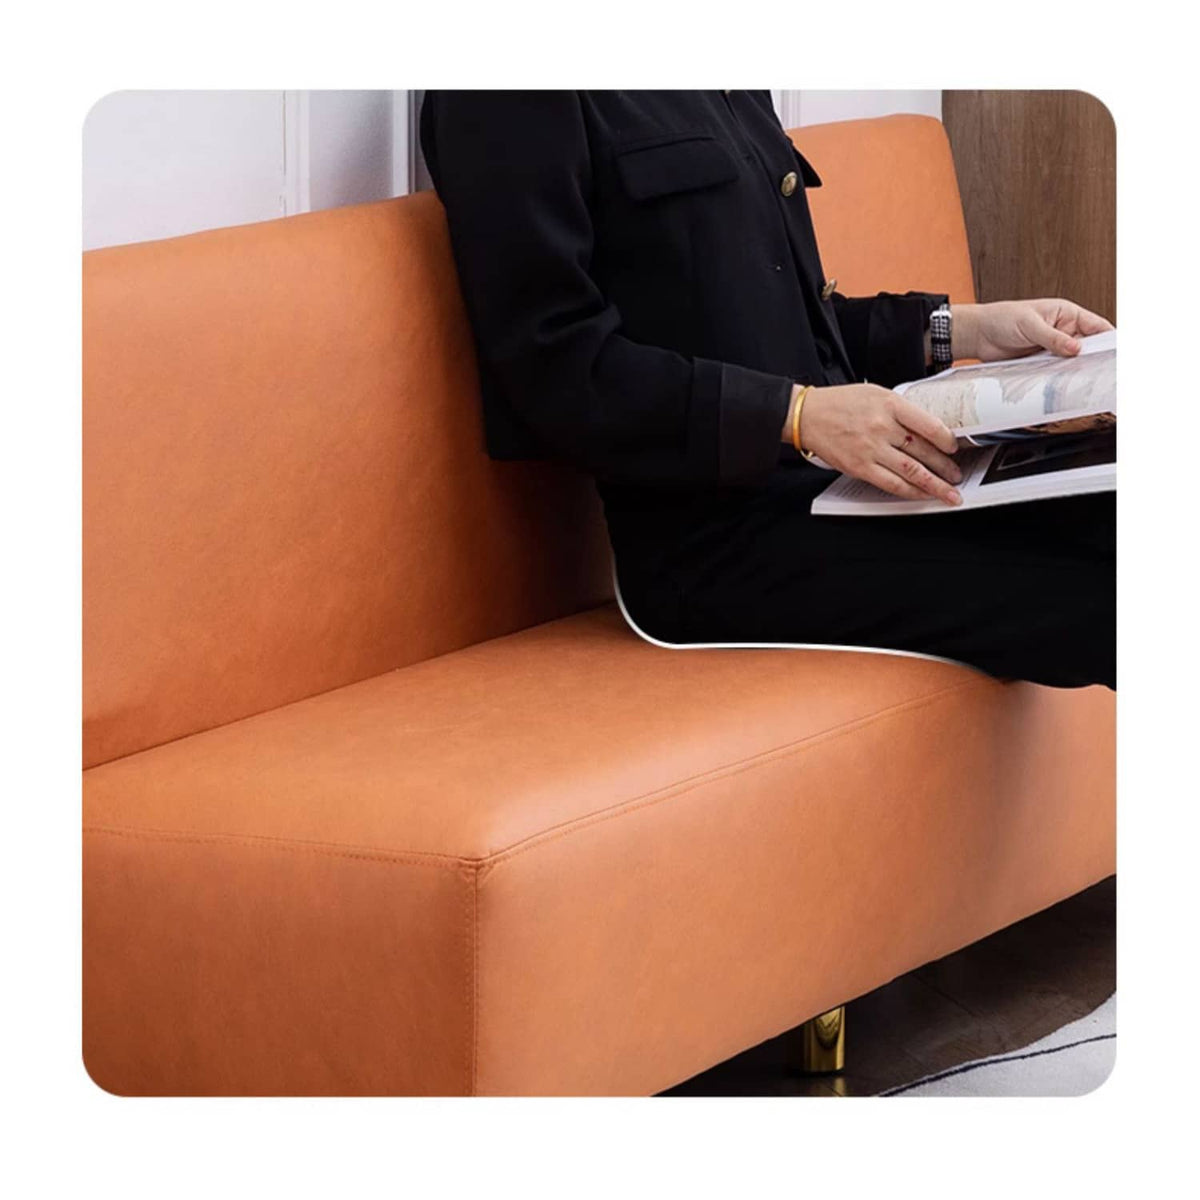 Stylish Multi-Color Sofa: Orange, Khaki, Dark Green, Blue & Light Brown with Premium Wood Finish & Techno Fabric Blend qm-15